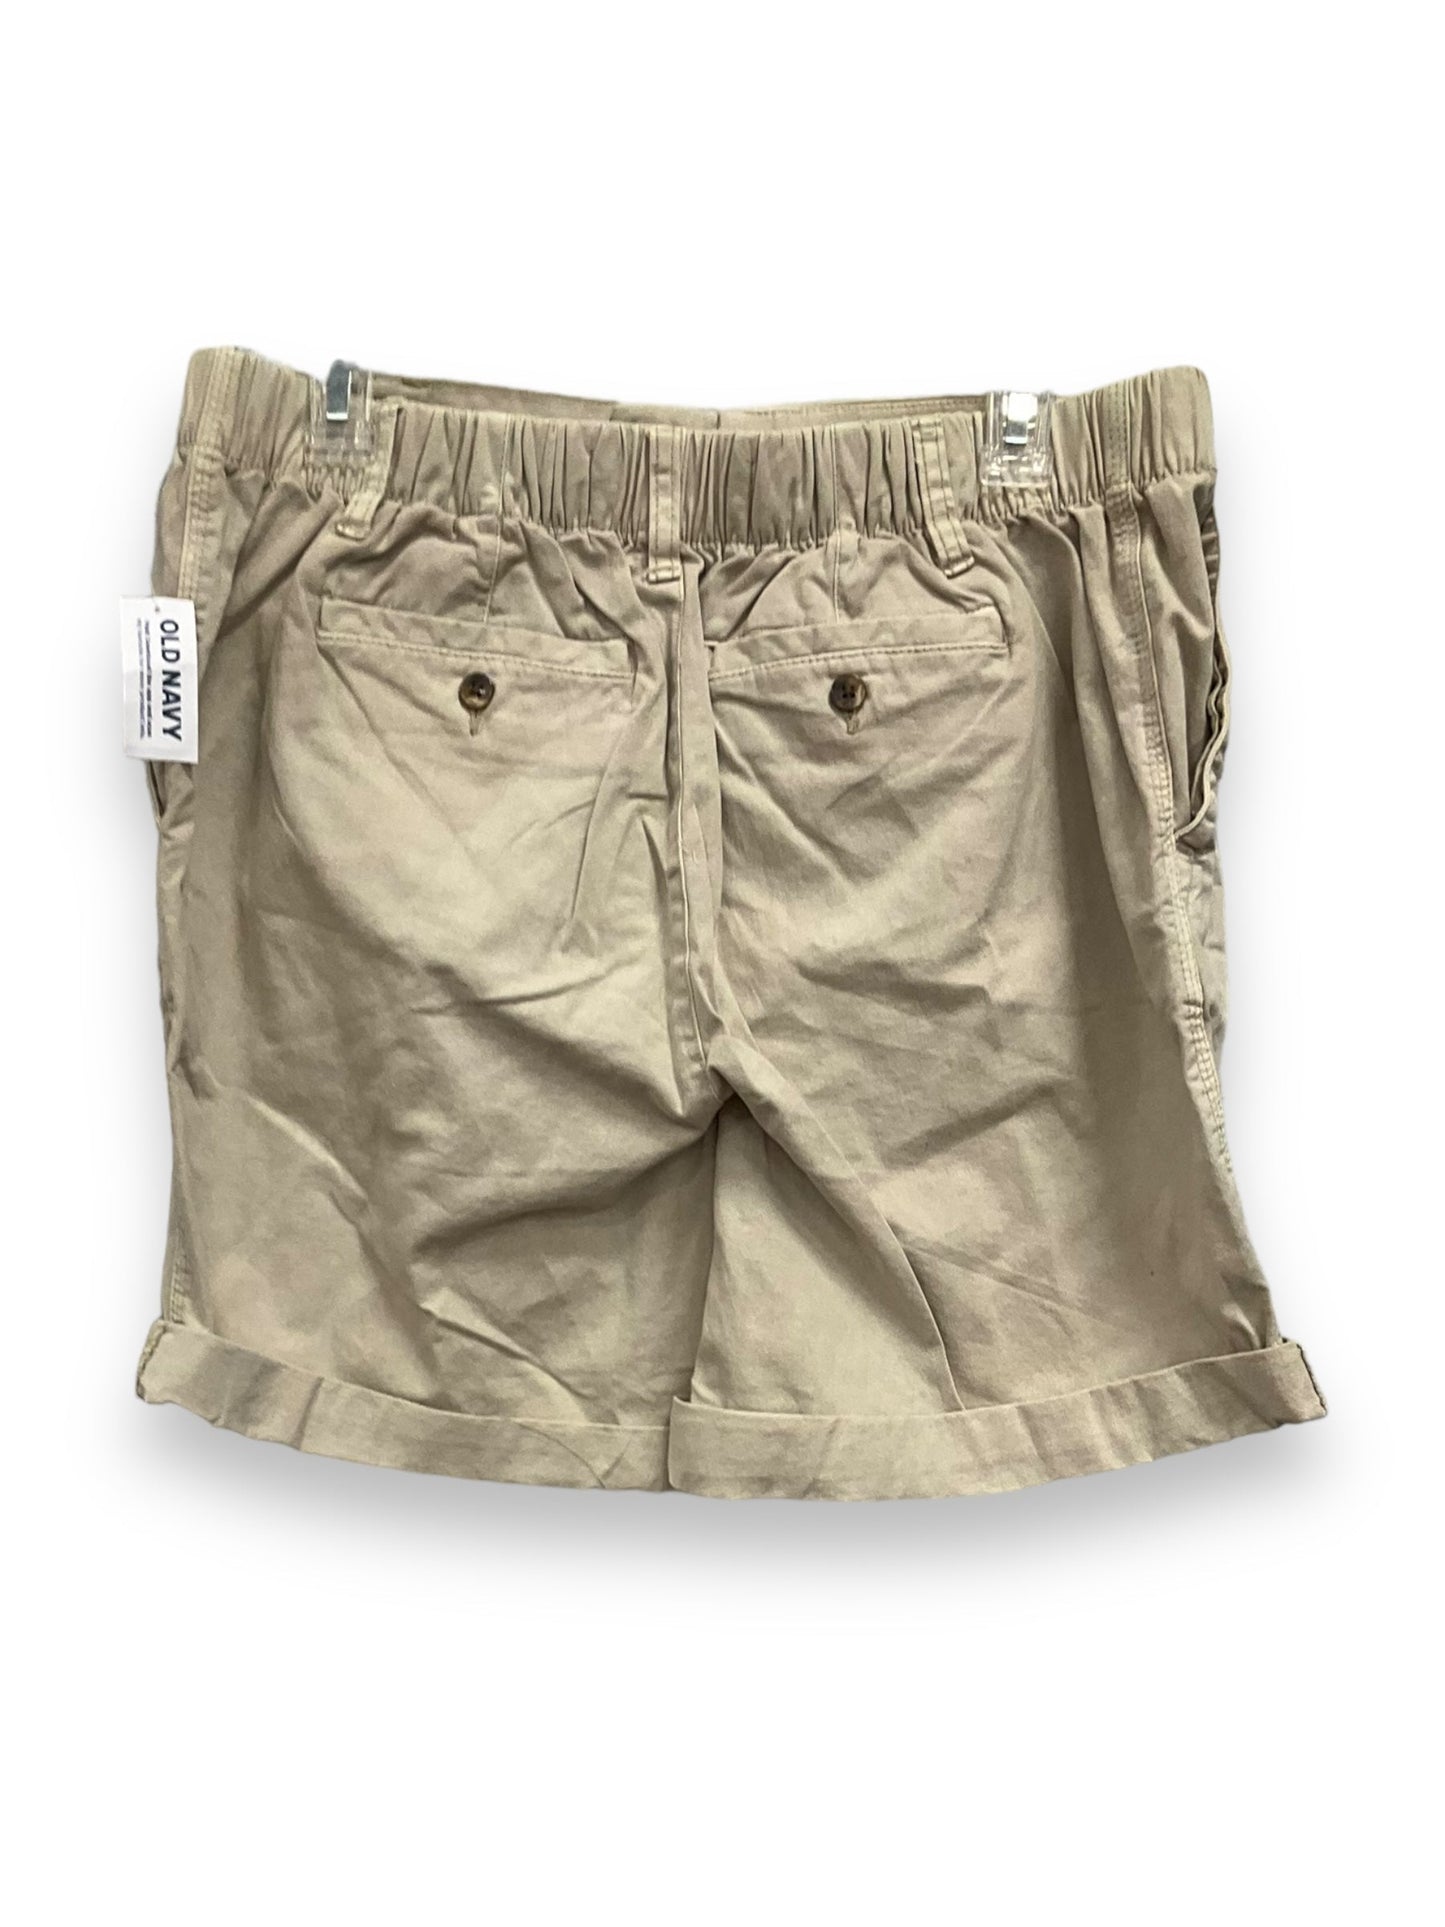 Tan Shorts Old Navy, Size L